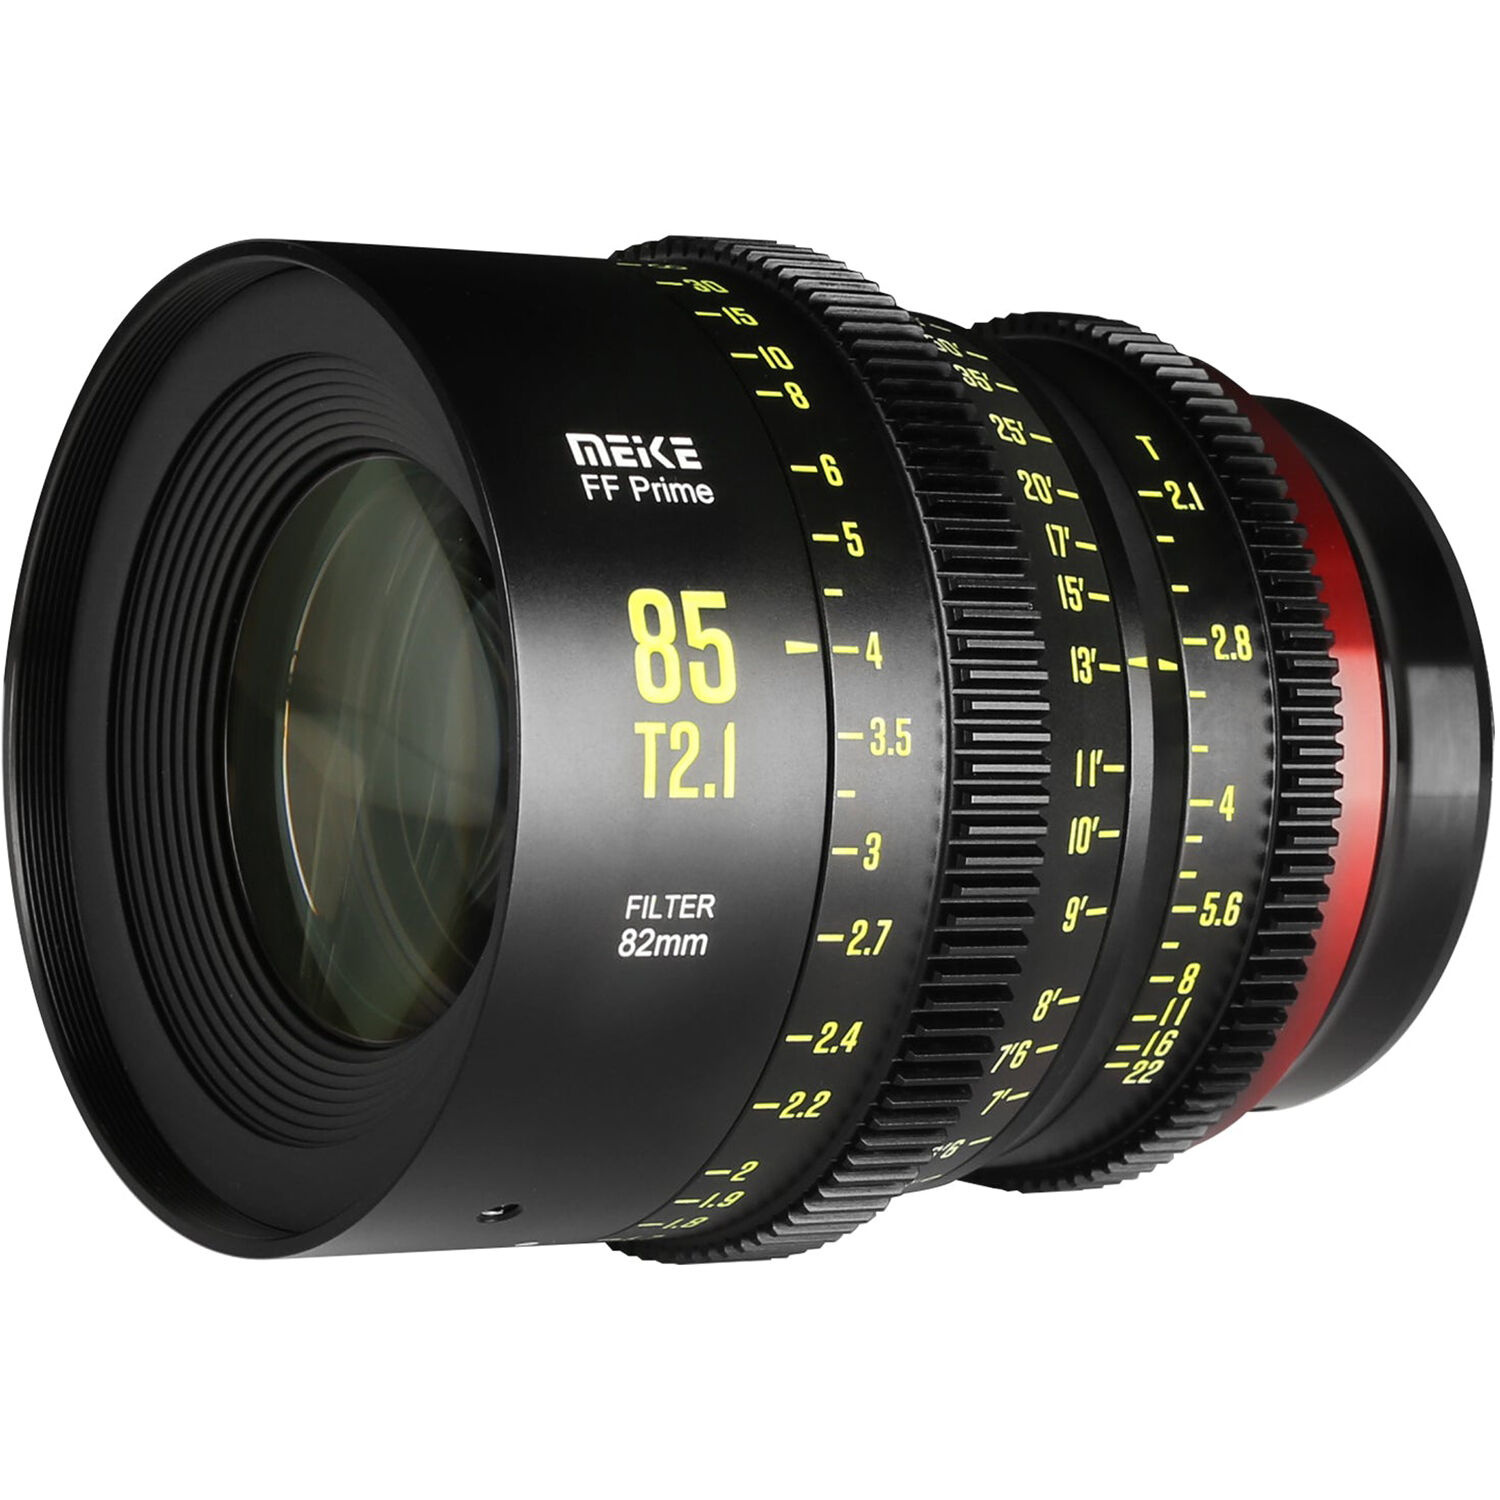 Meike 85mm T2.1 Full-Frame Prime Cine Lens (RF-Mount, Feet/Meters)